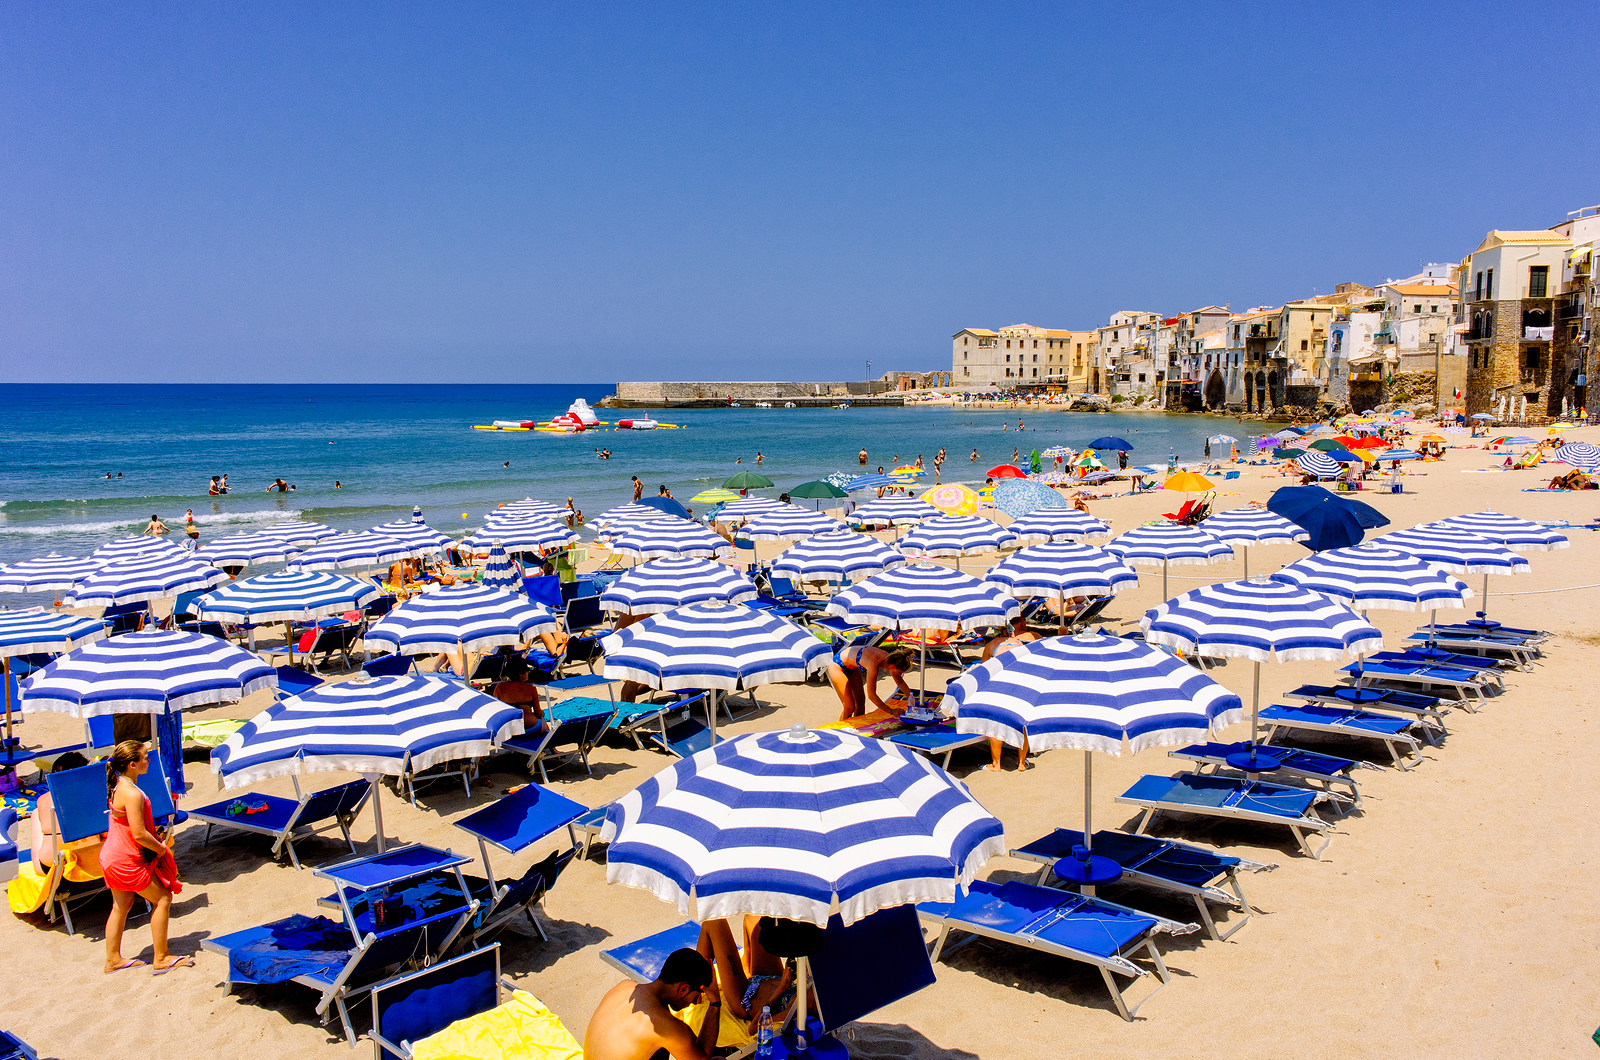 Top 5 Beaches In Sicily